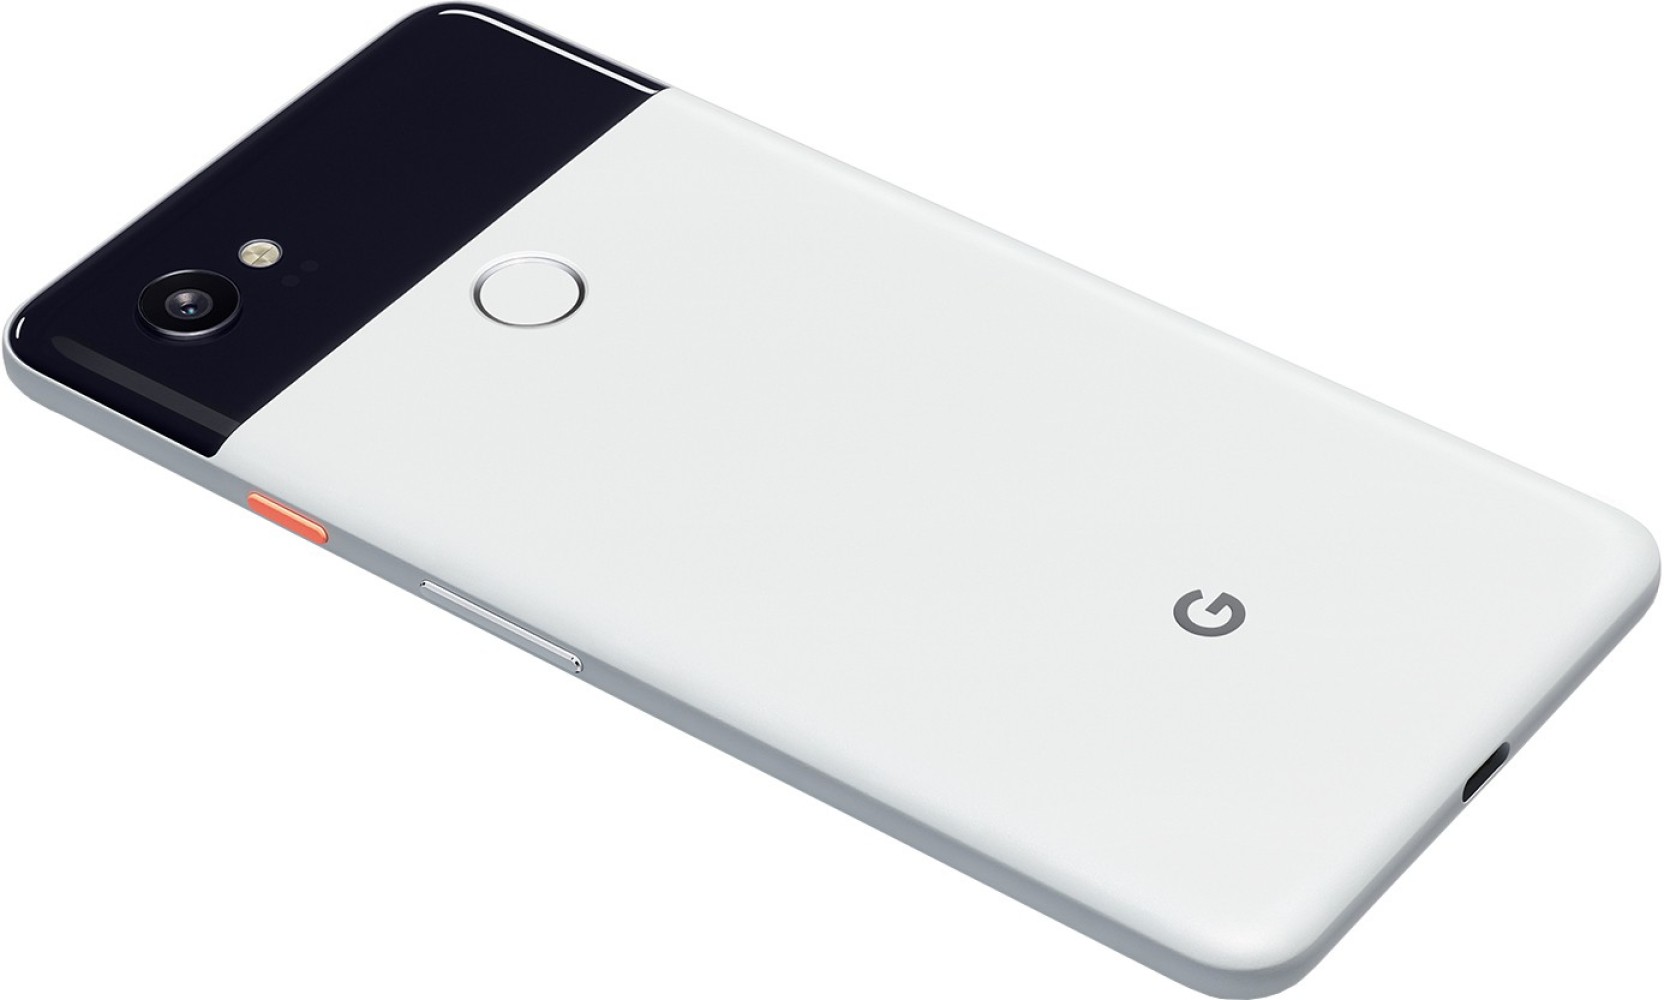 Google Pixel 2 XL specs, review, release date PhonesData